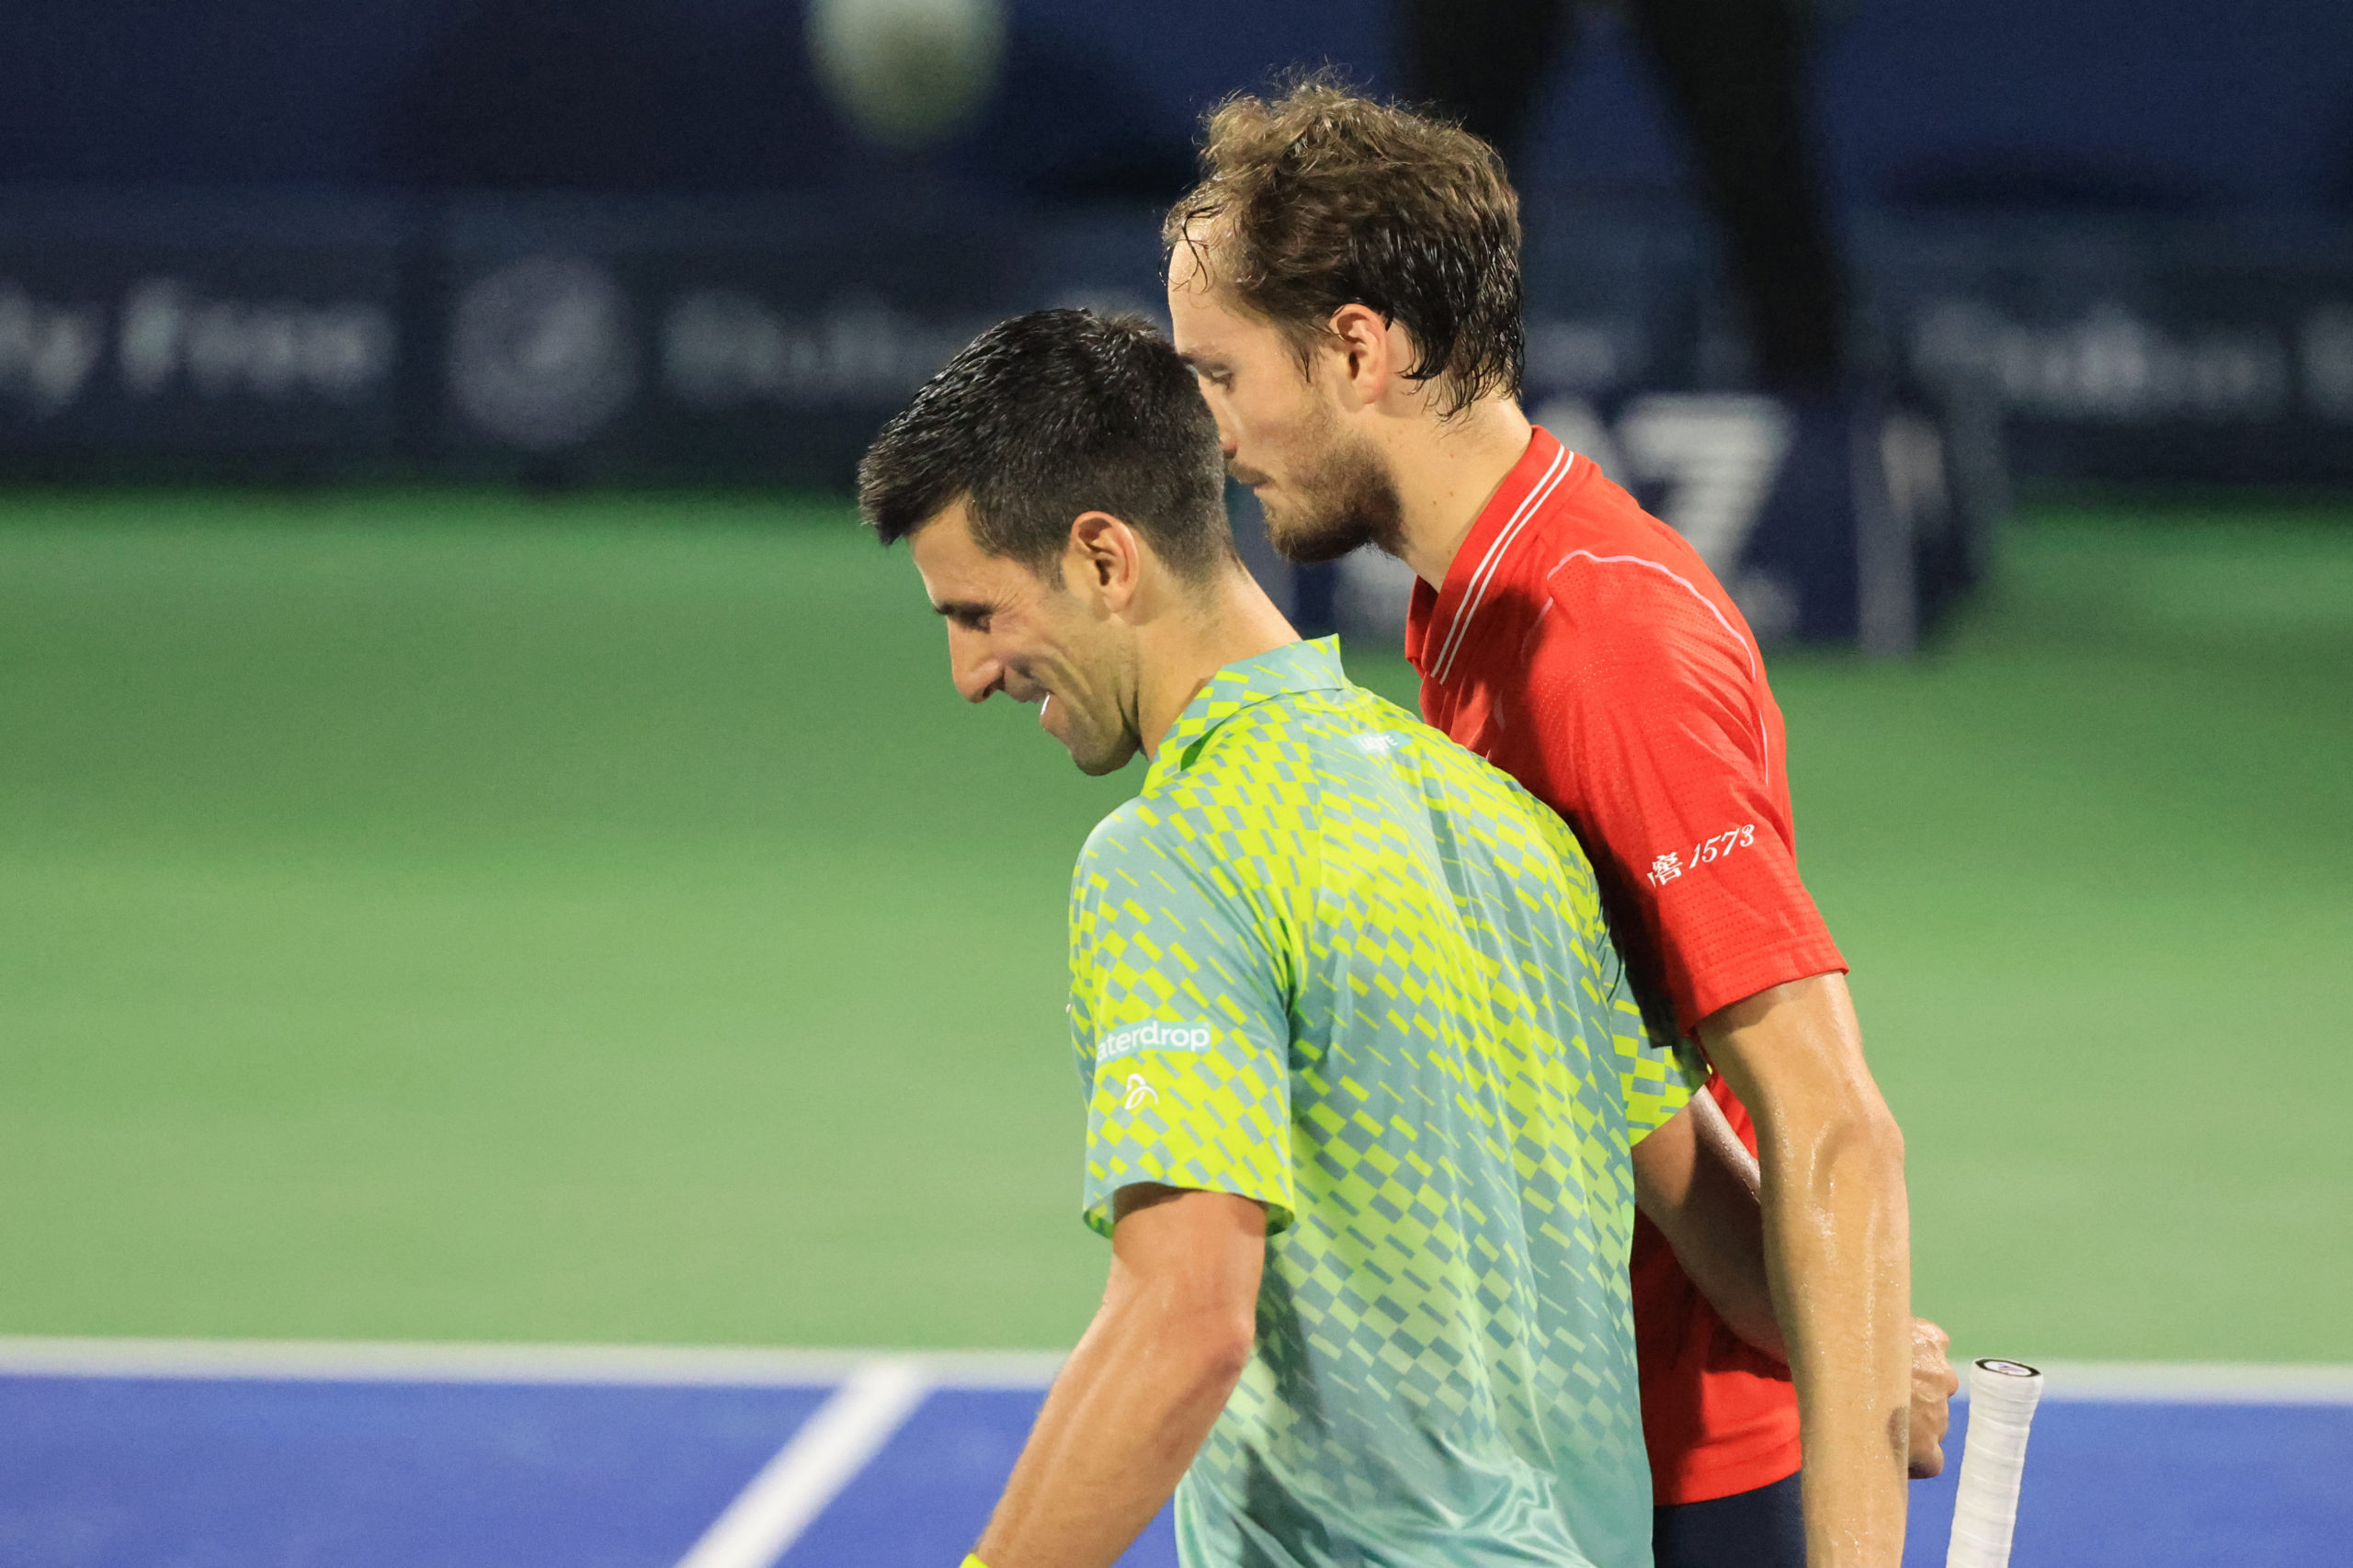 Medvedev ends Djokovic winning streak, faces Rublev in Dubai final